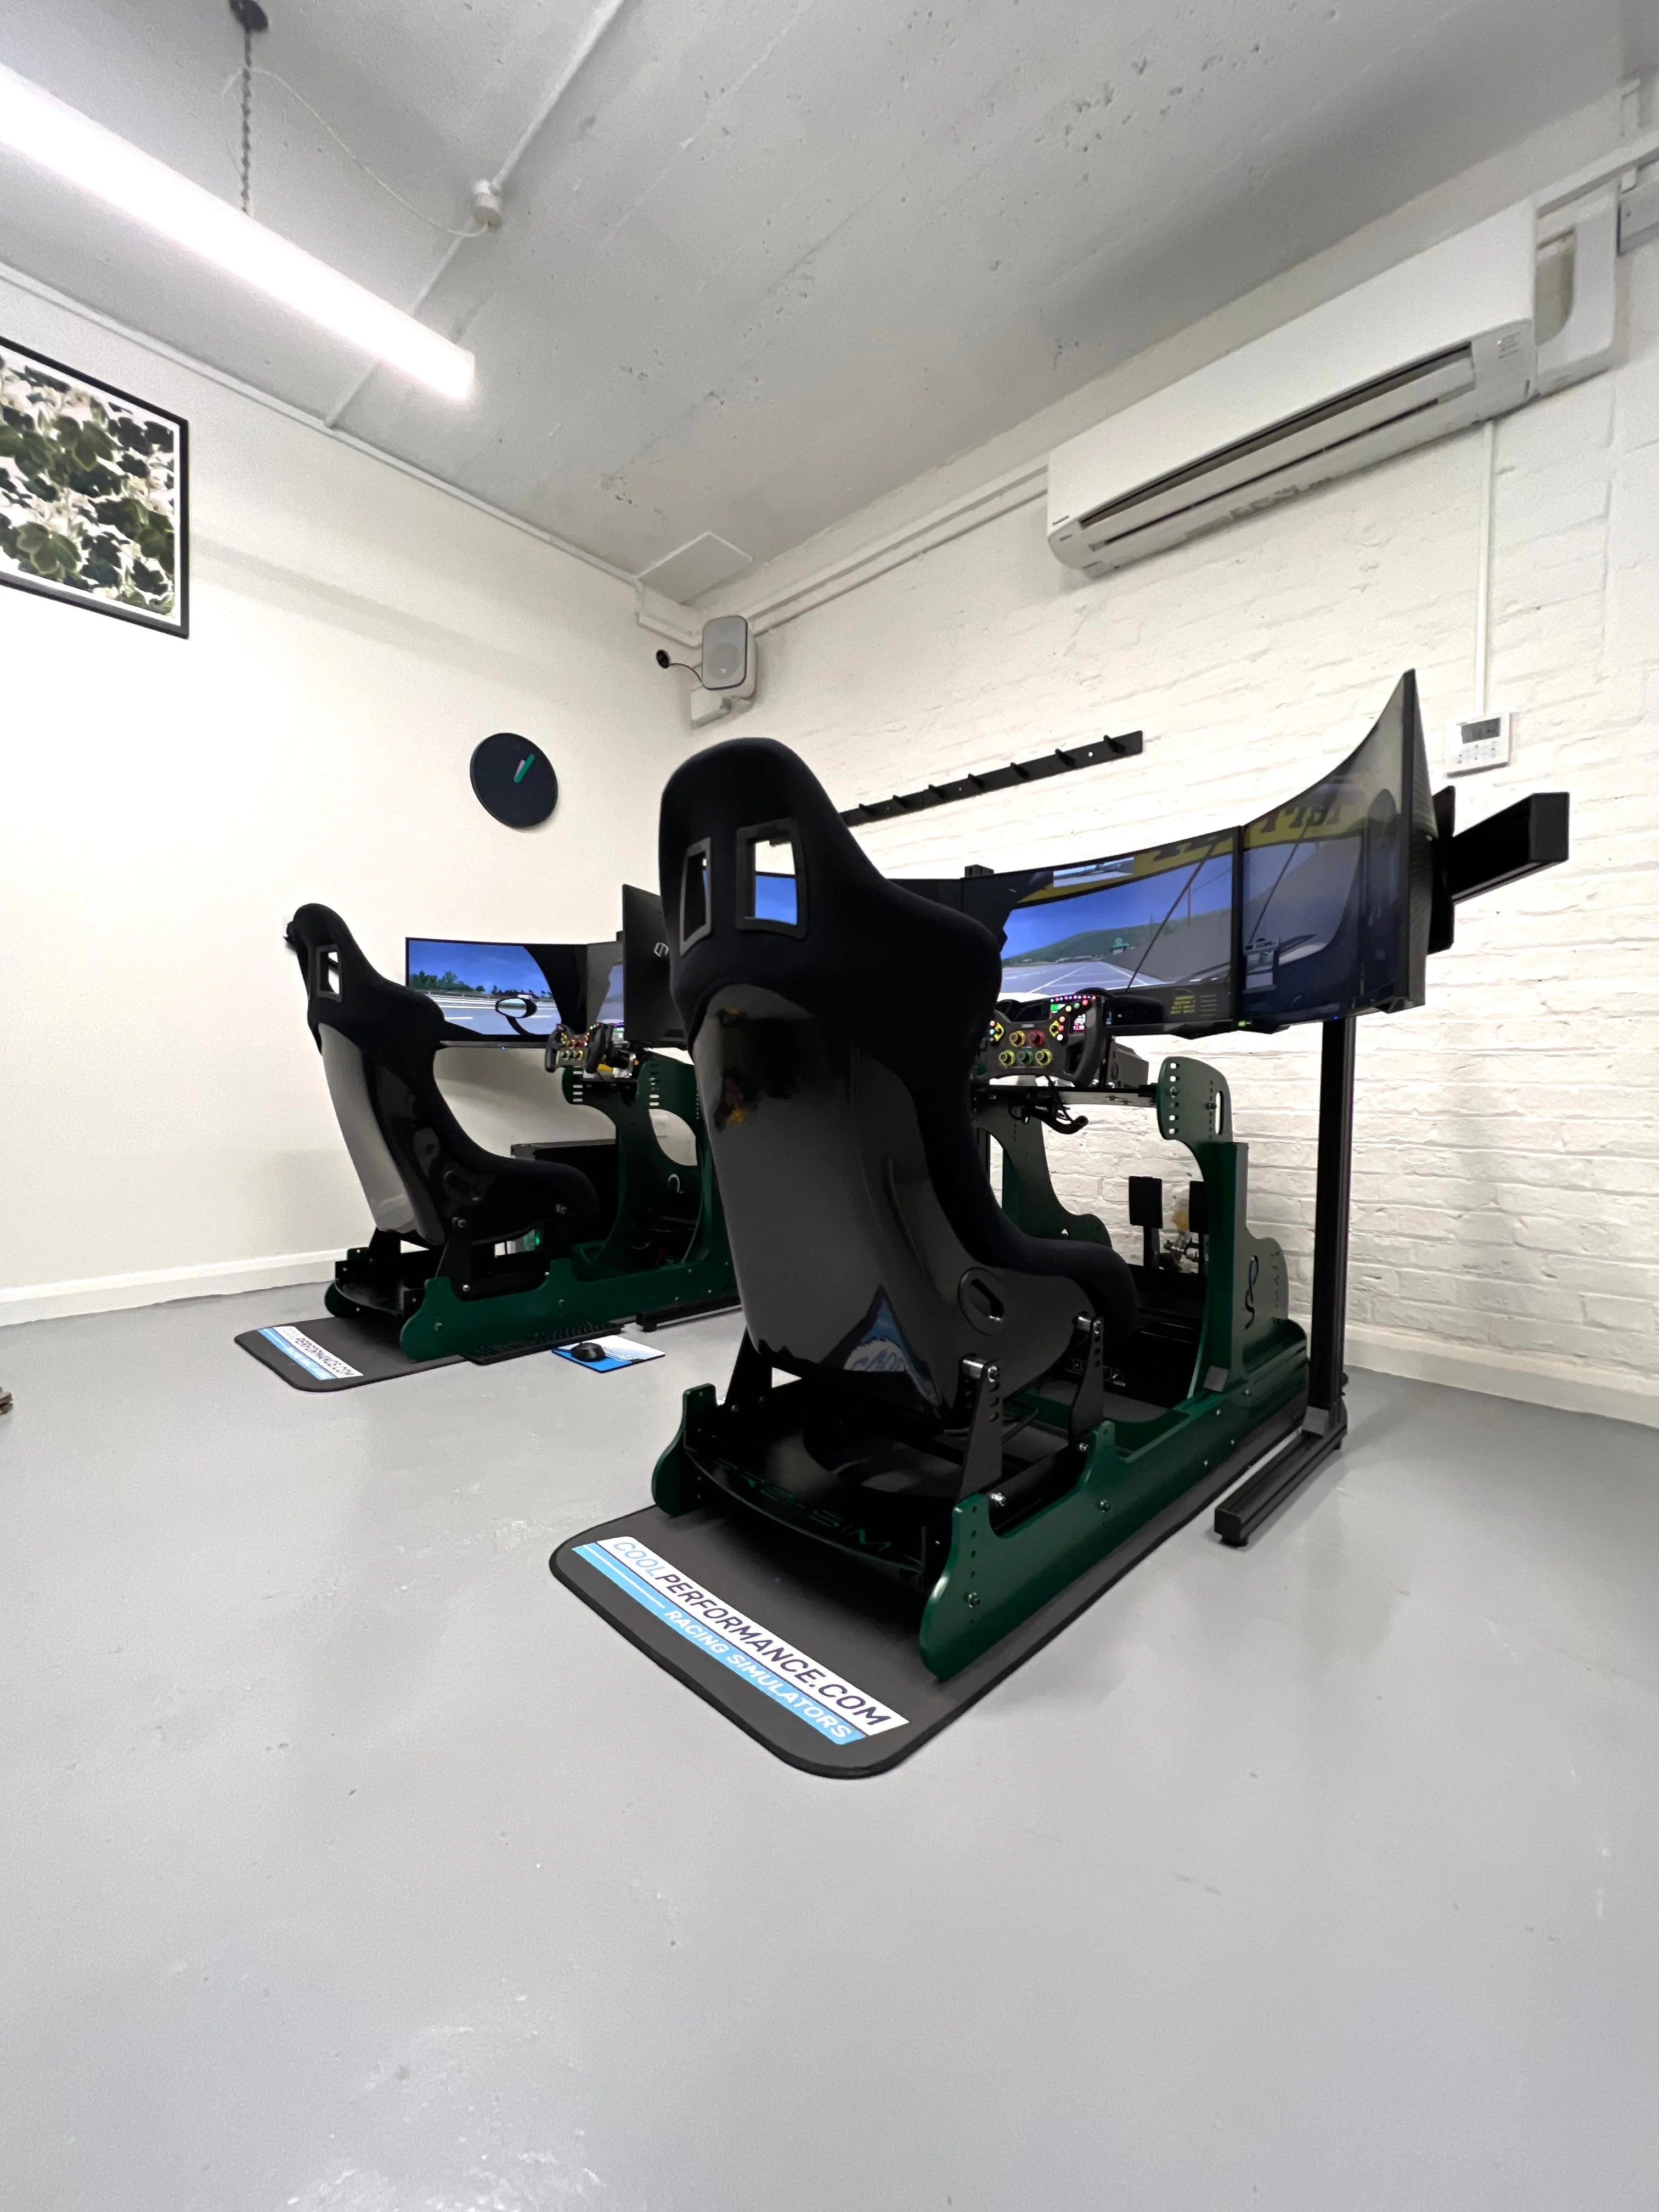 Cool Performance E Sport Racing Simulator